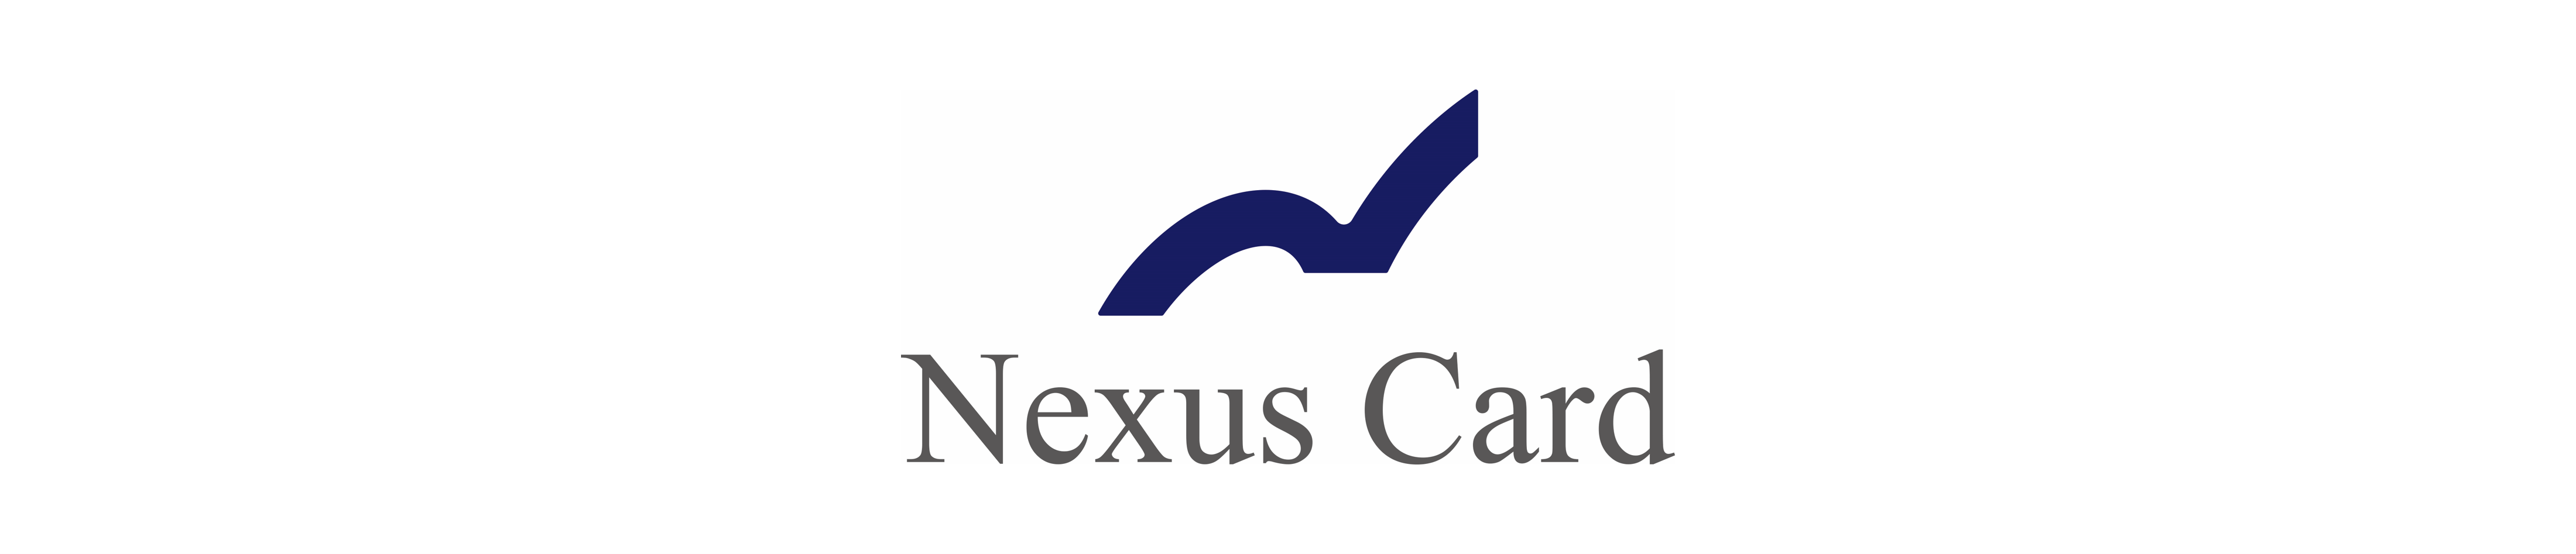 Nexus Card株式会社